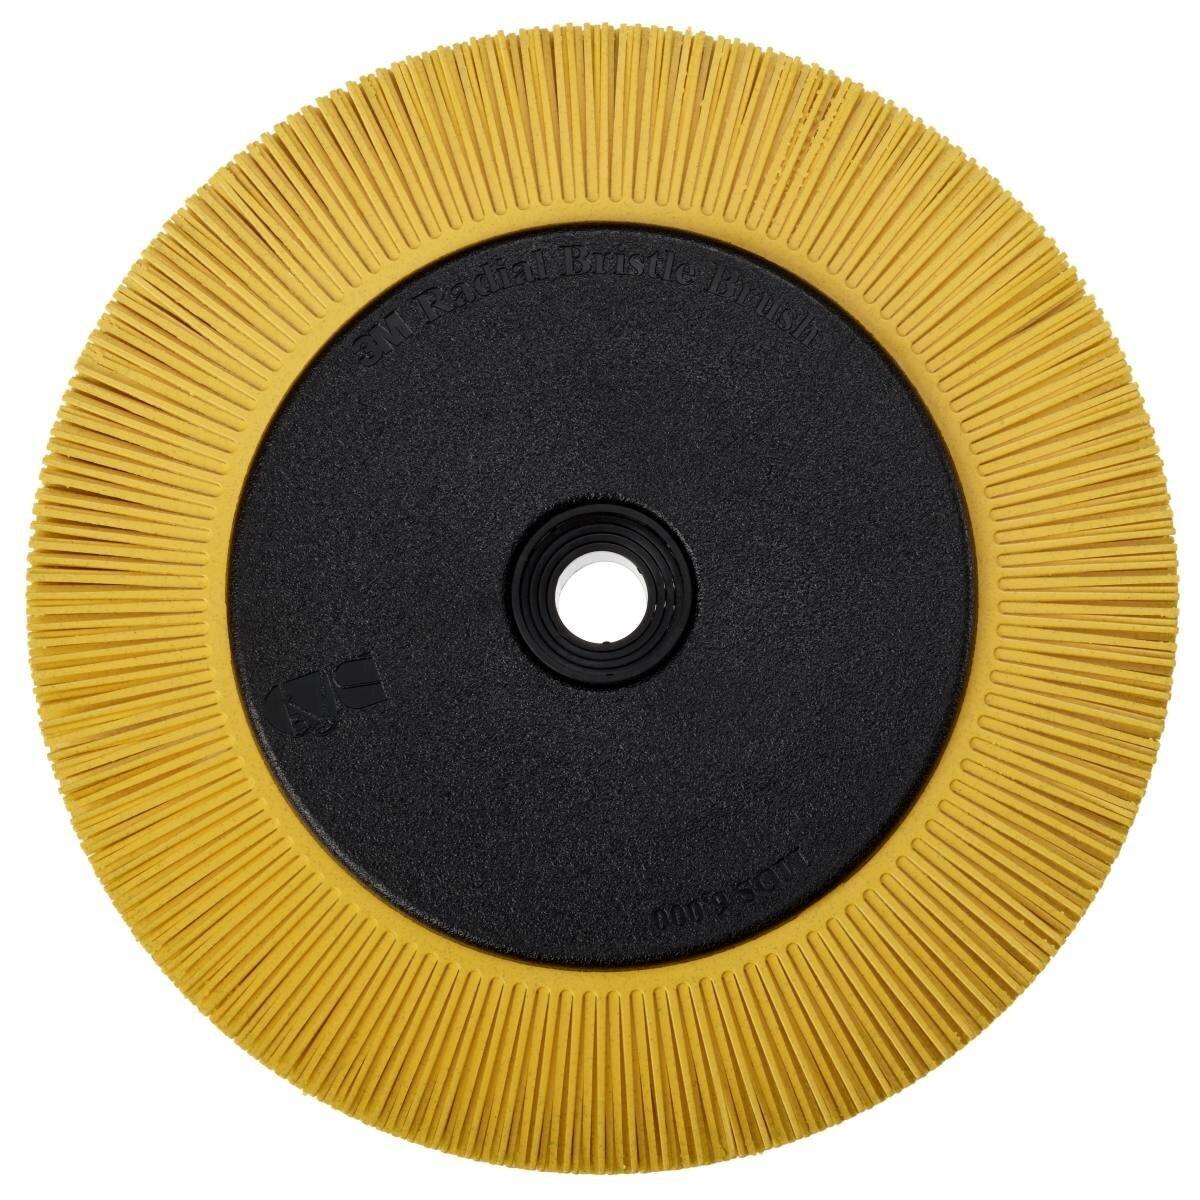 3M Scotch-Brite radiale borstelschijf BB-ZB met flens, geel, 203,2 mm, P80, type S #33082